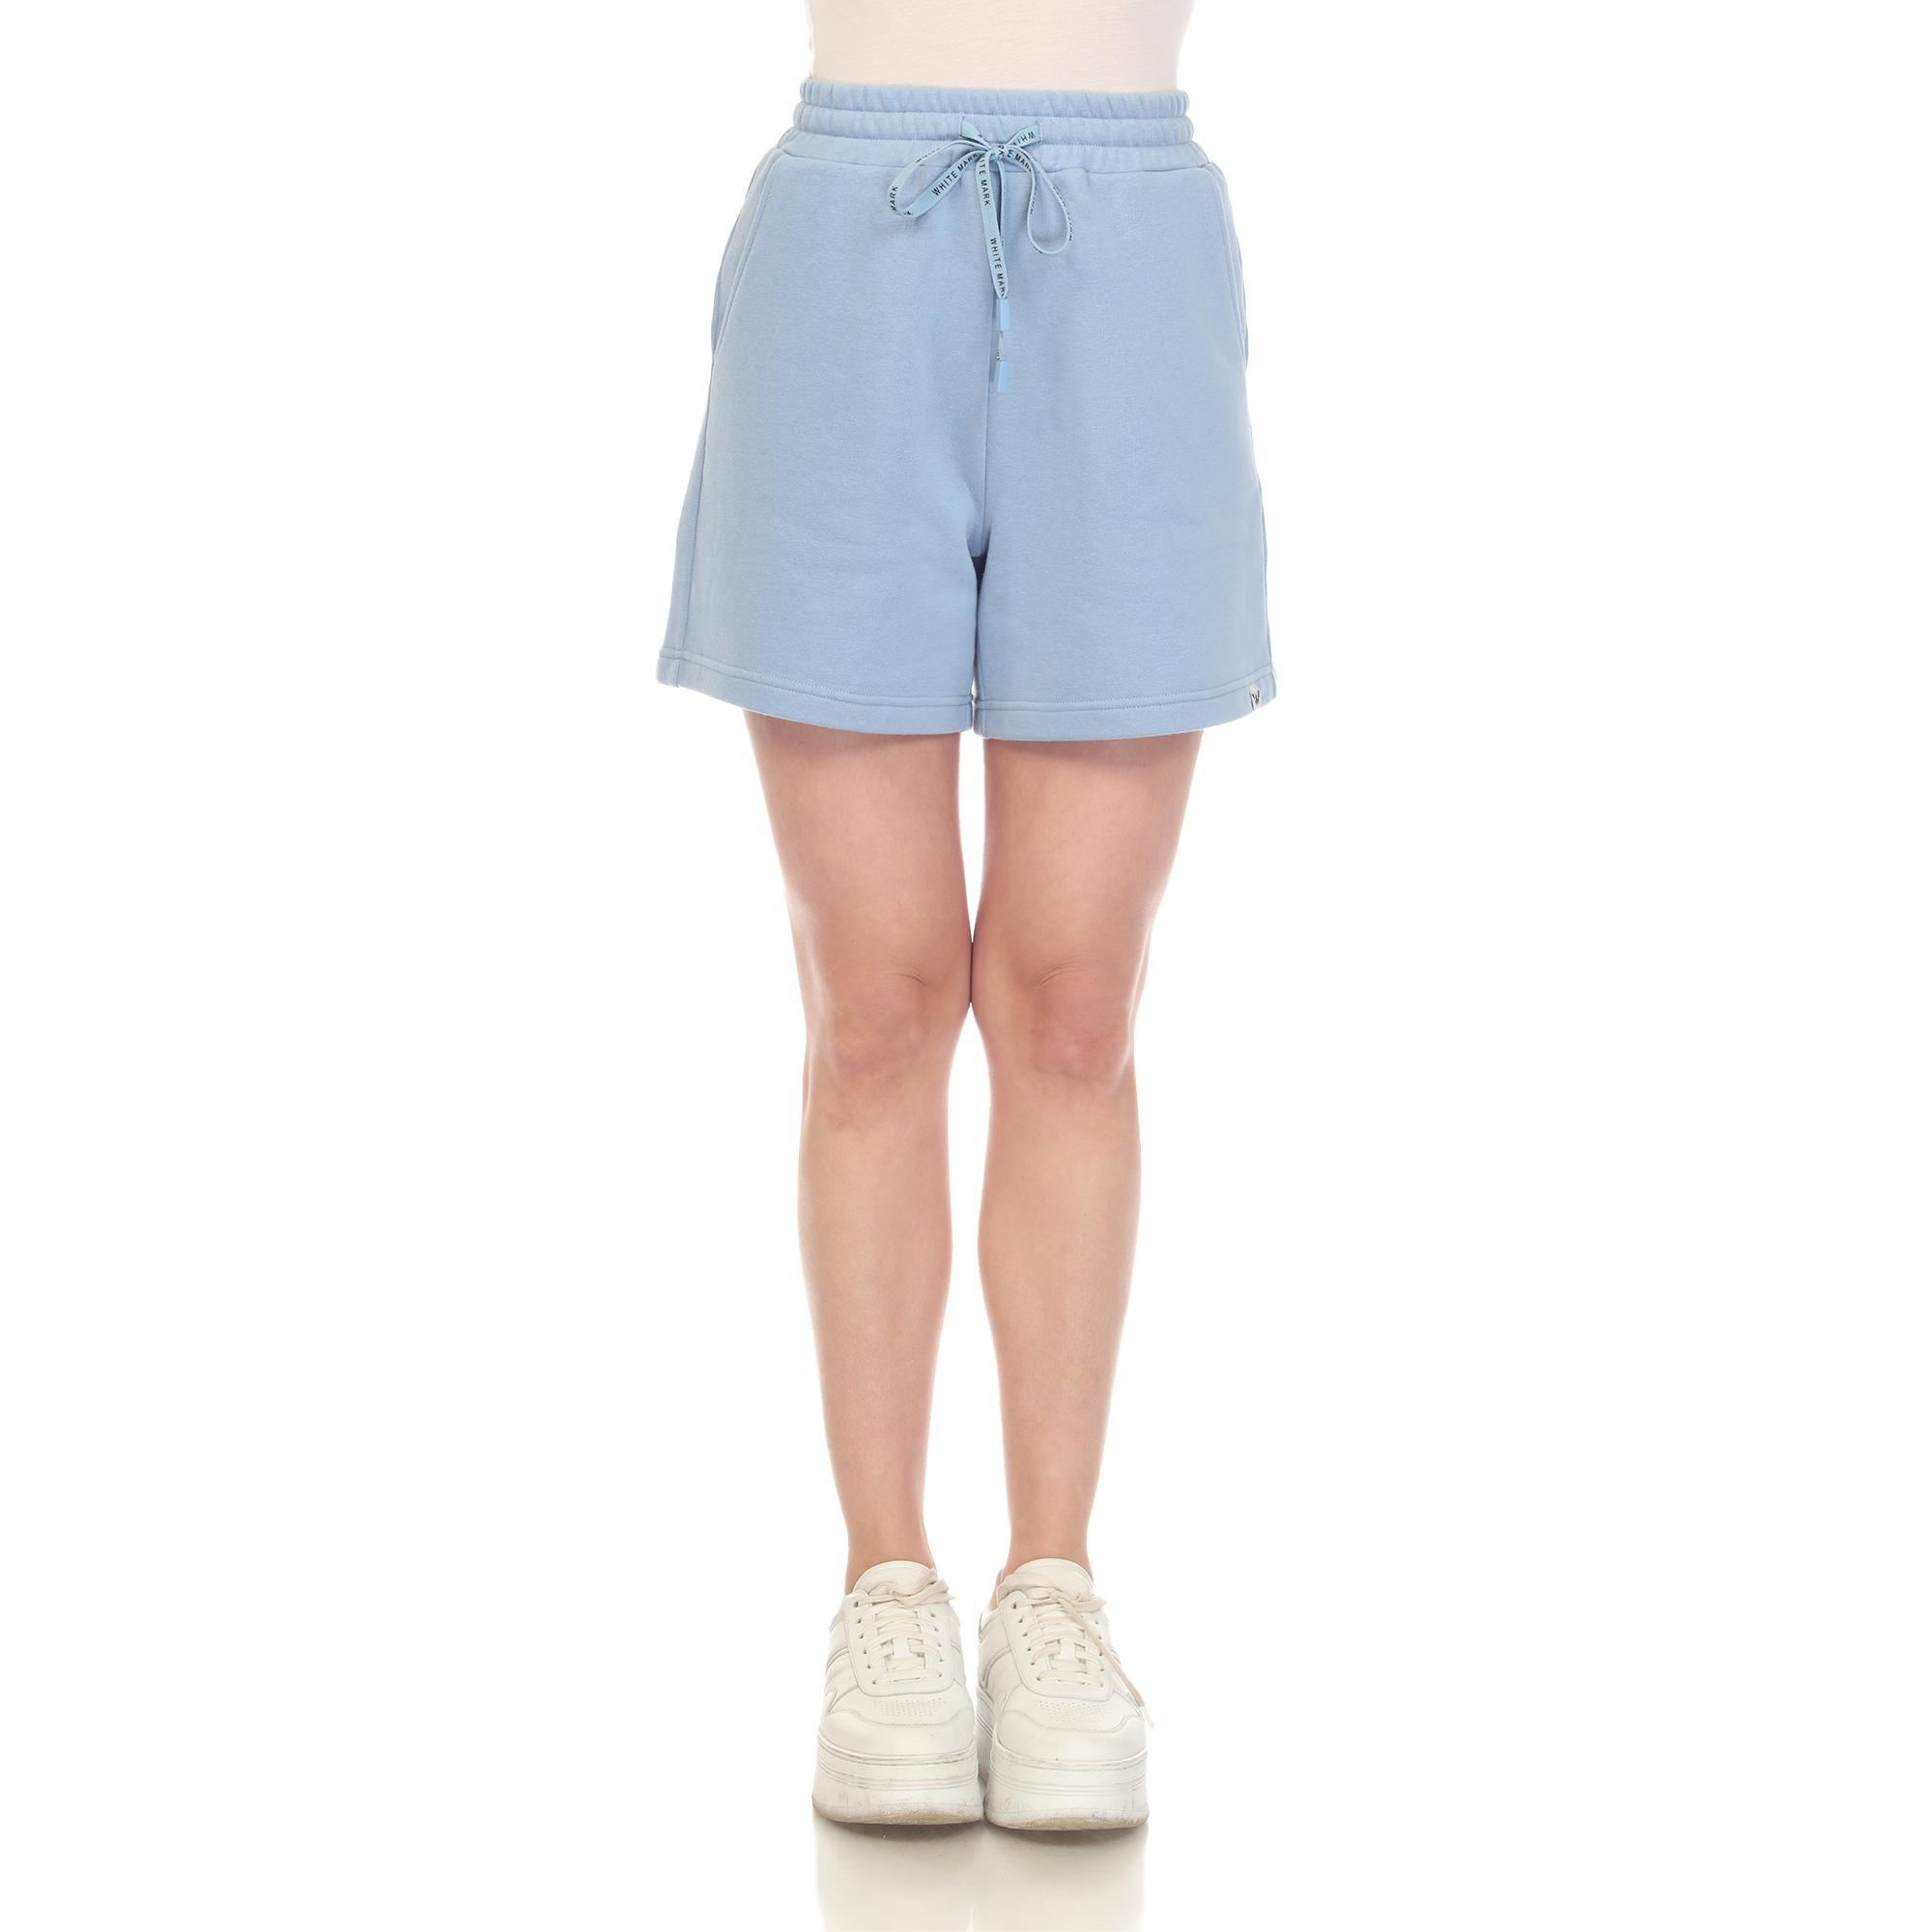 White Mark Women's Super Soft Drawstring Waistband Sweat Shorts - Denim Blue, 1X